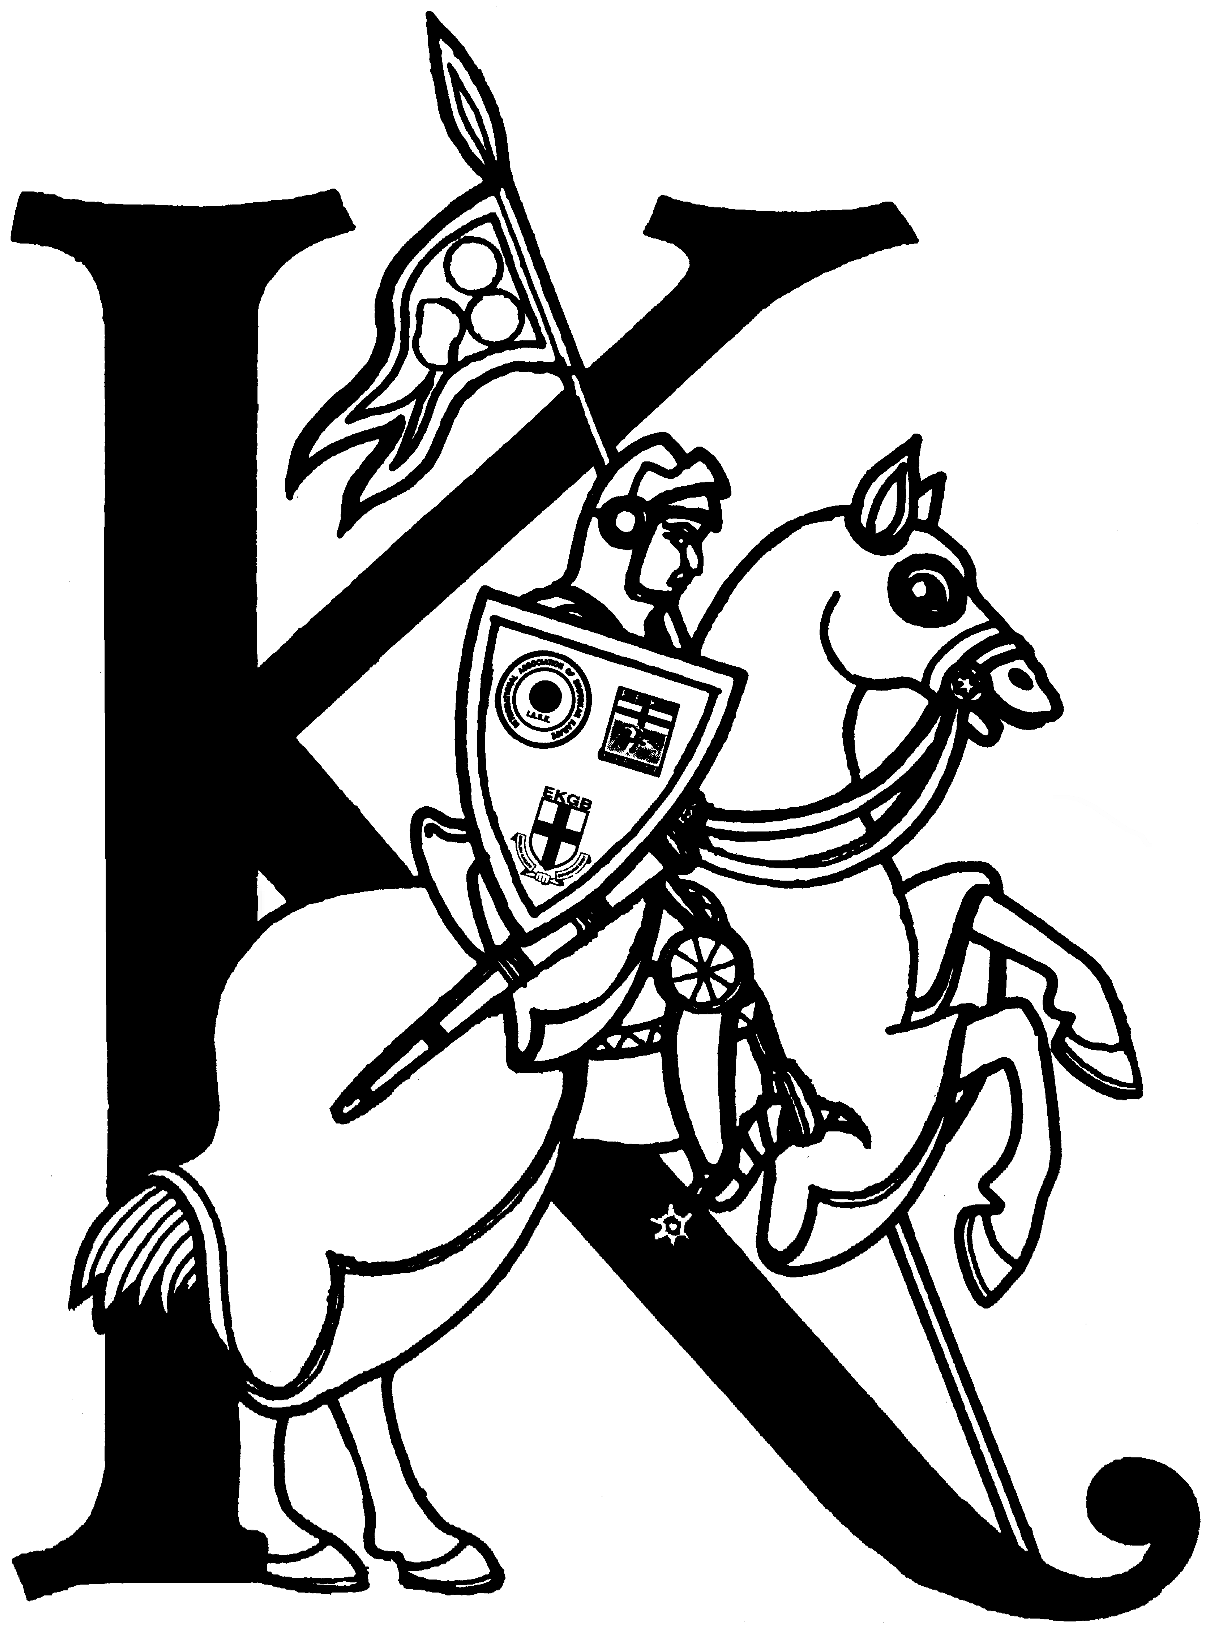 Knights Karate Club logo